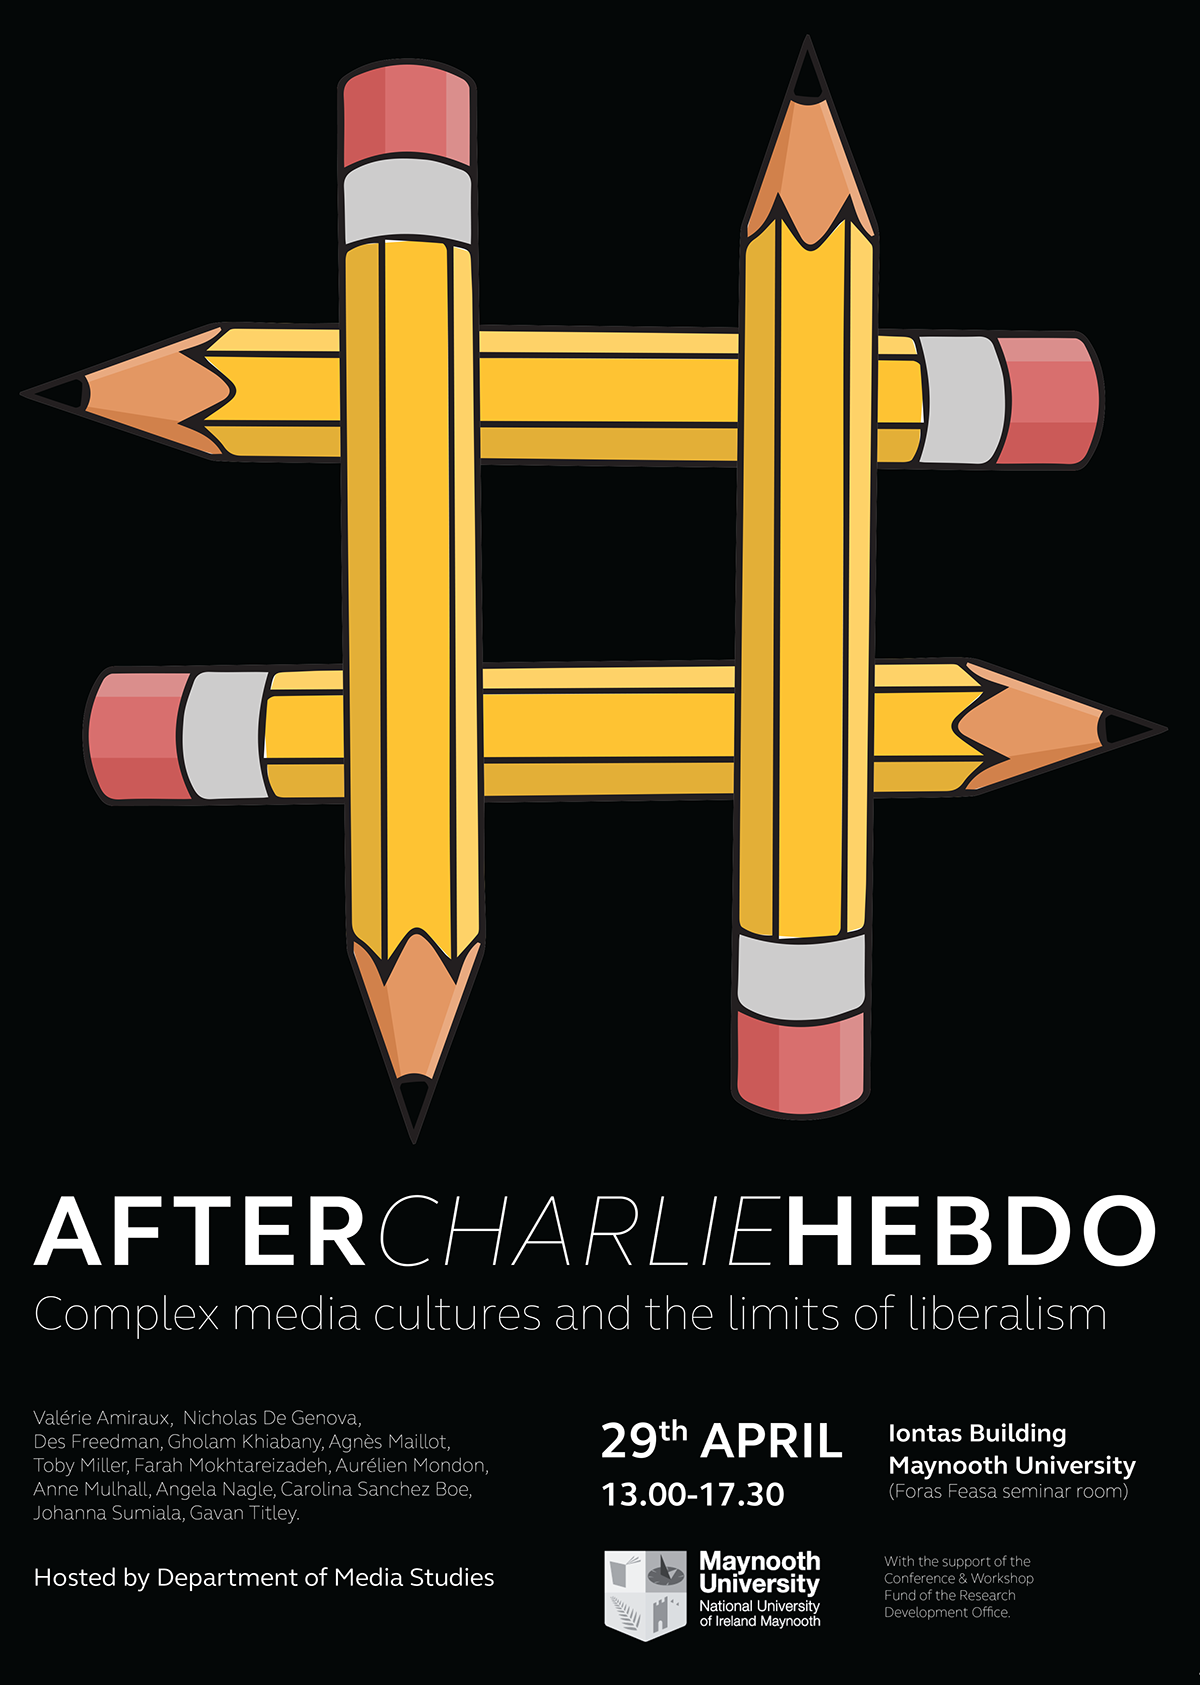 After Charlie Hebdo NUIM Maynooth University Jesuischarlie hashtag #jesuischarlie Pencil illustration symposium poster Charlie Hebdo Poster